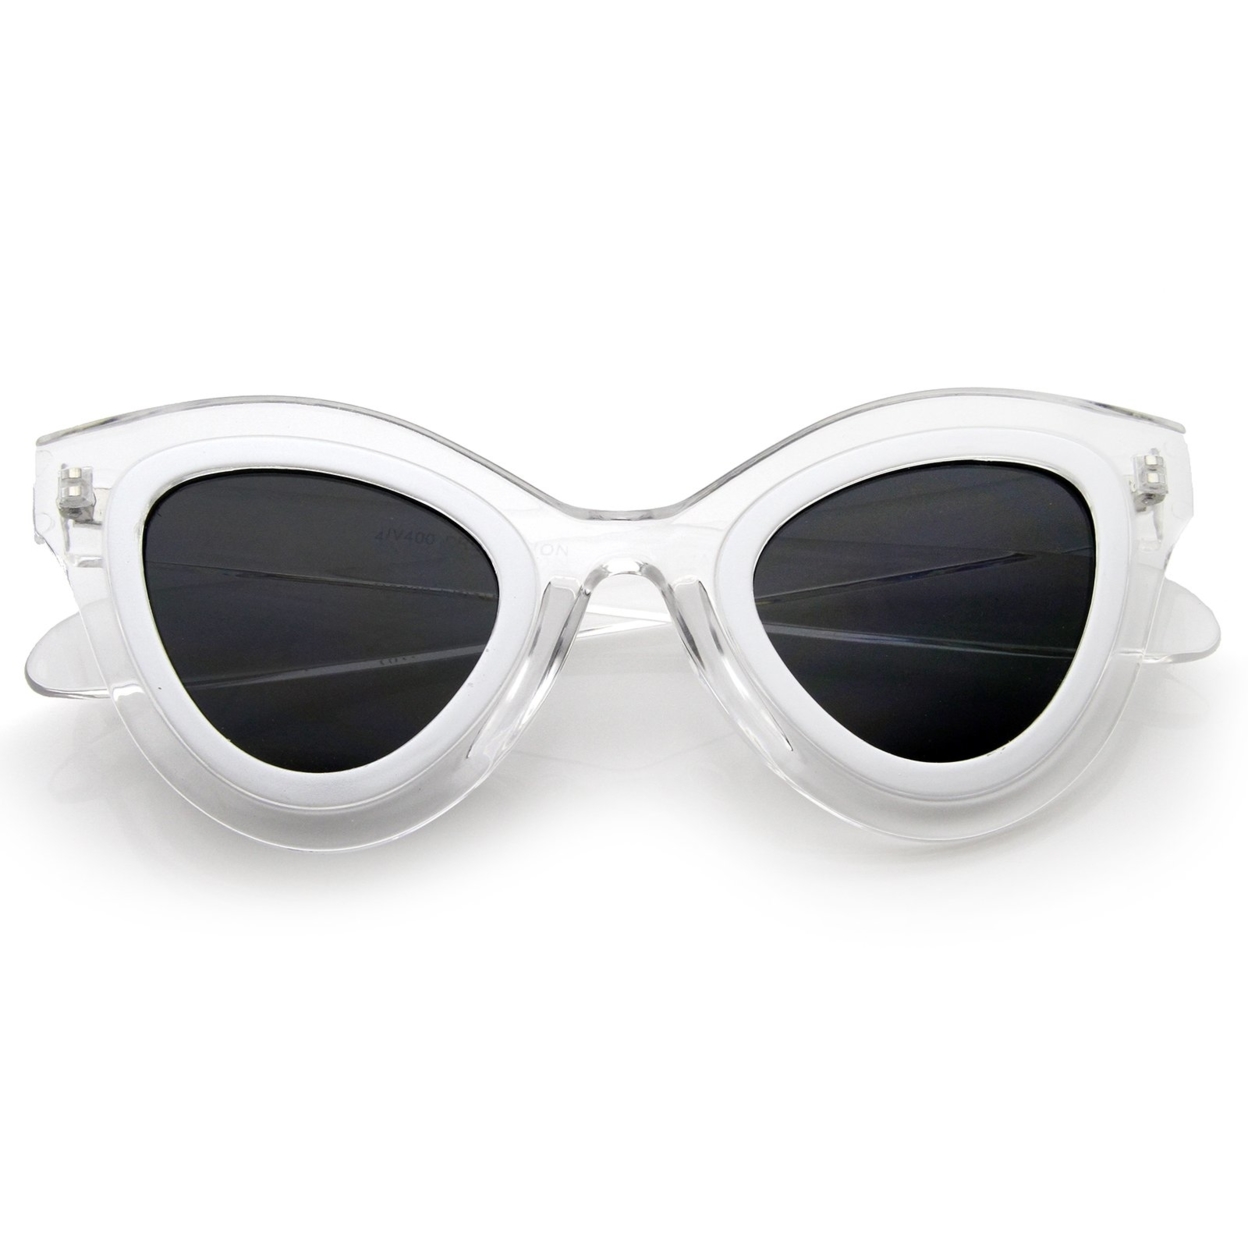 Womens High Fashion Two-Toned Chunky Oversize Cat Eye Sunglasses 42mm - Tortoise-Black / Lavender